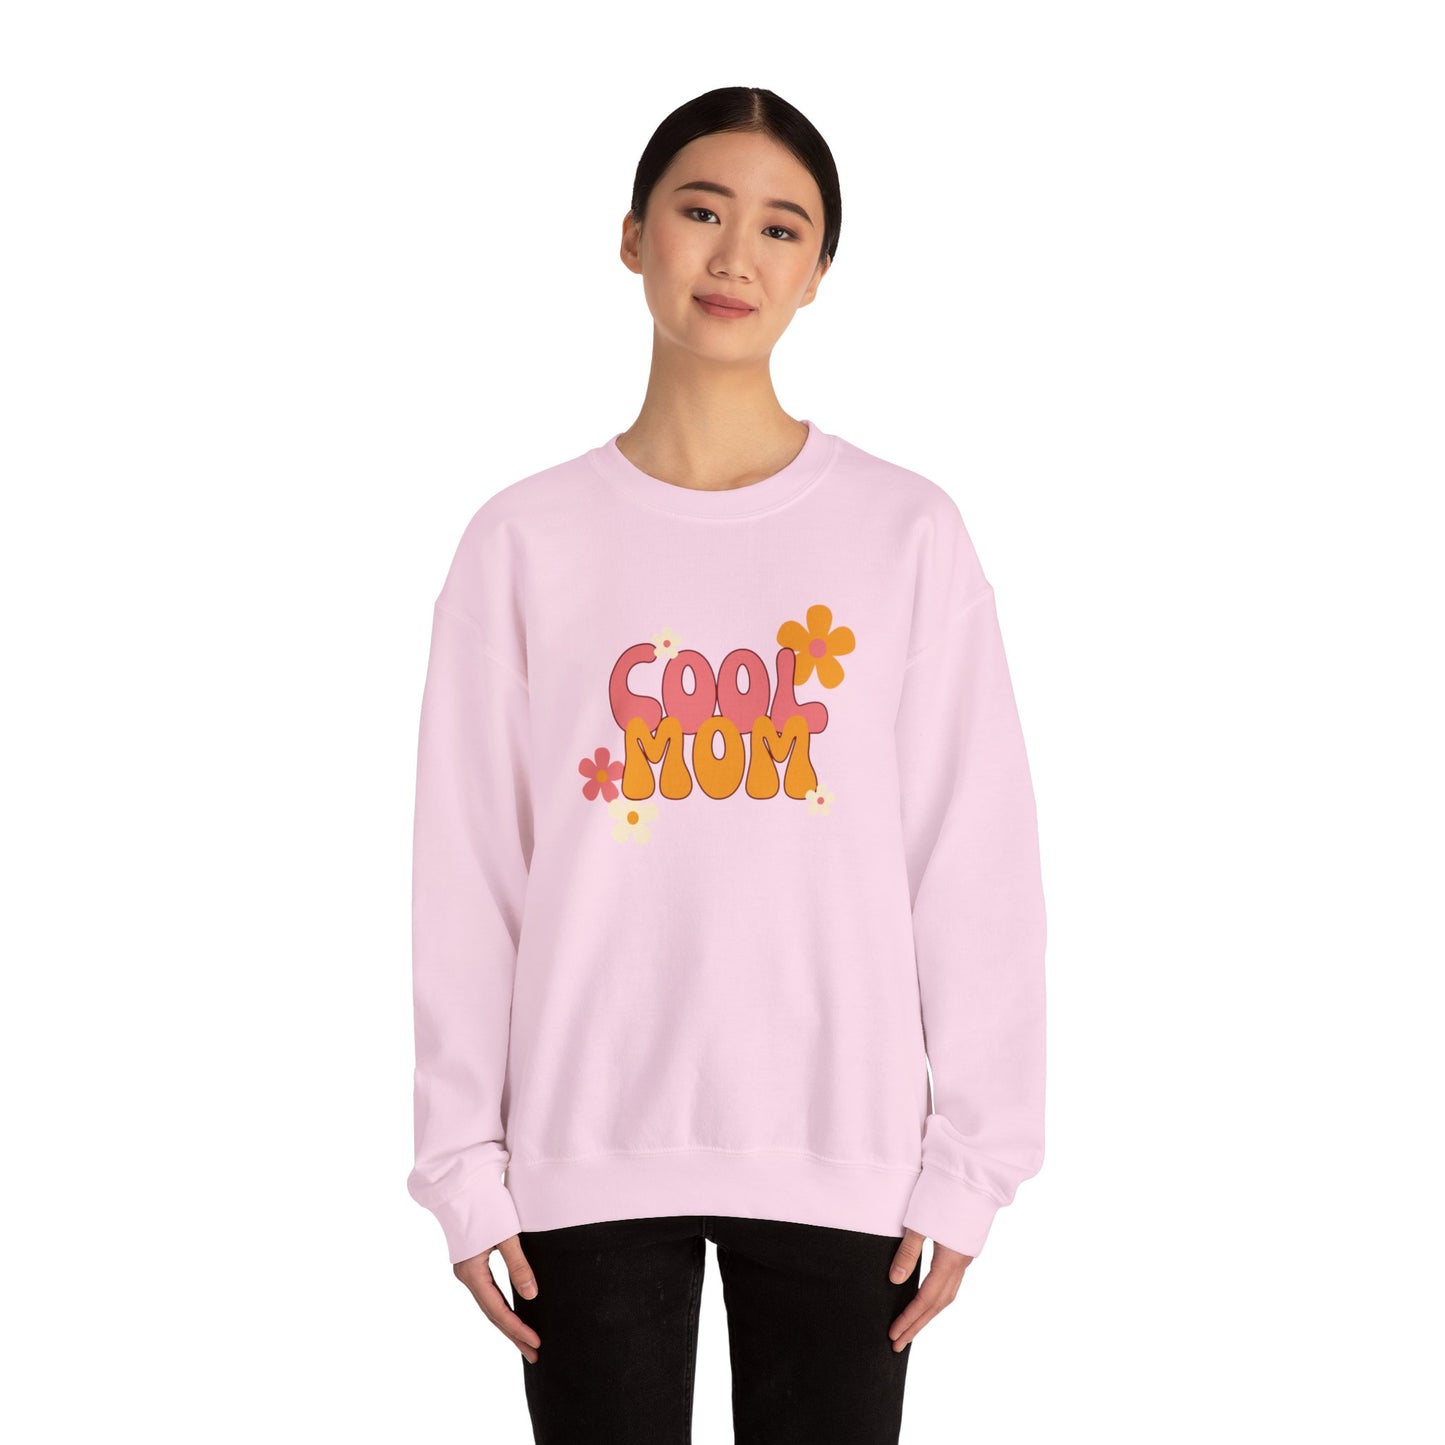 COOL MOM crew neck sweatshirt